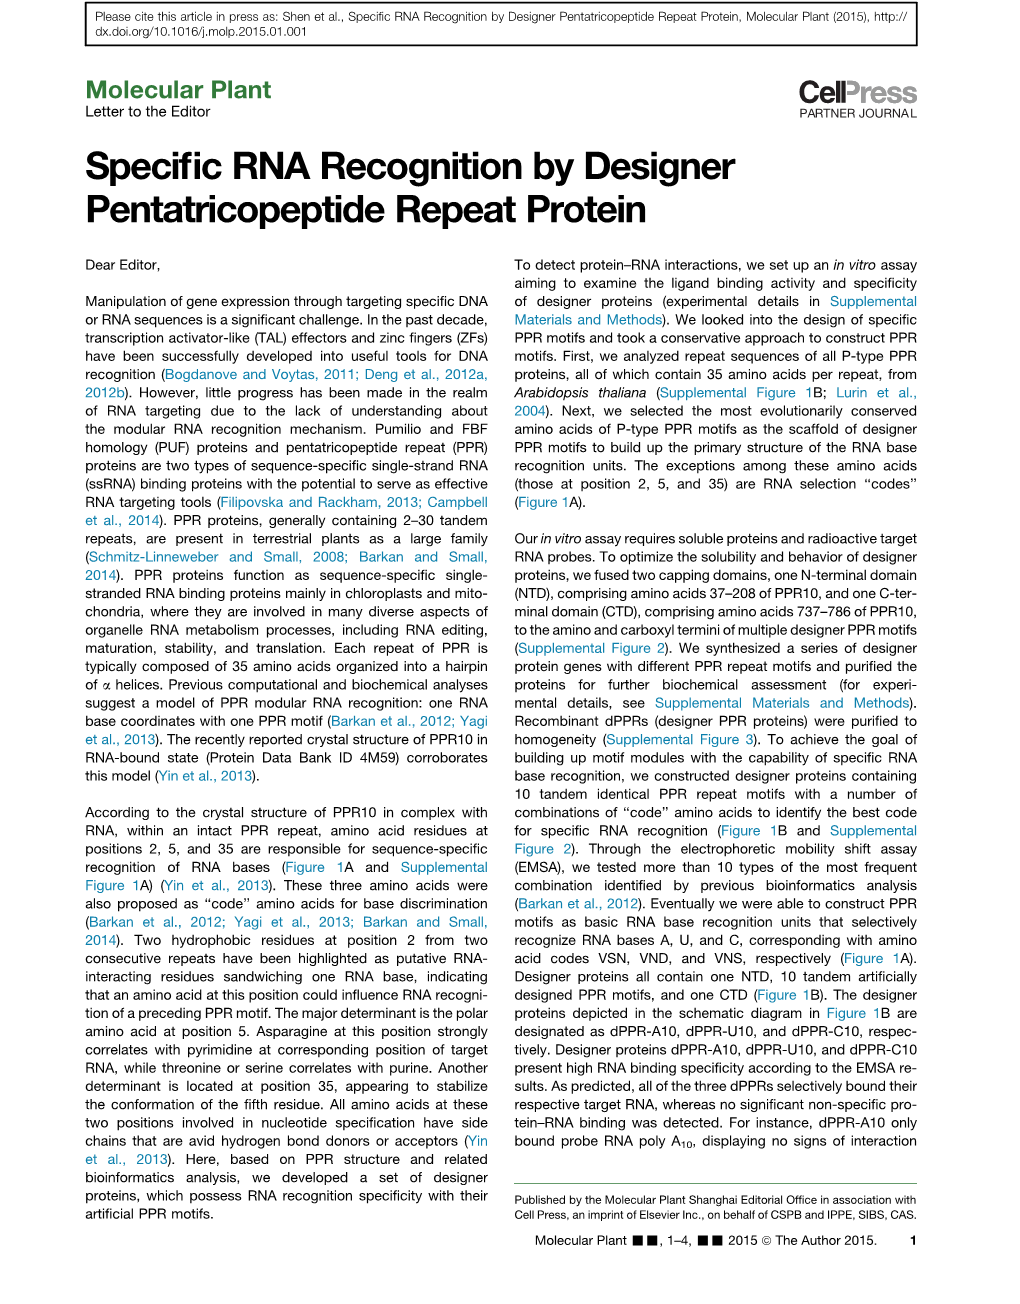 Specific RNA Recognition by Designer Pentatricopeptide Repeat